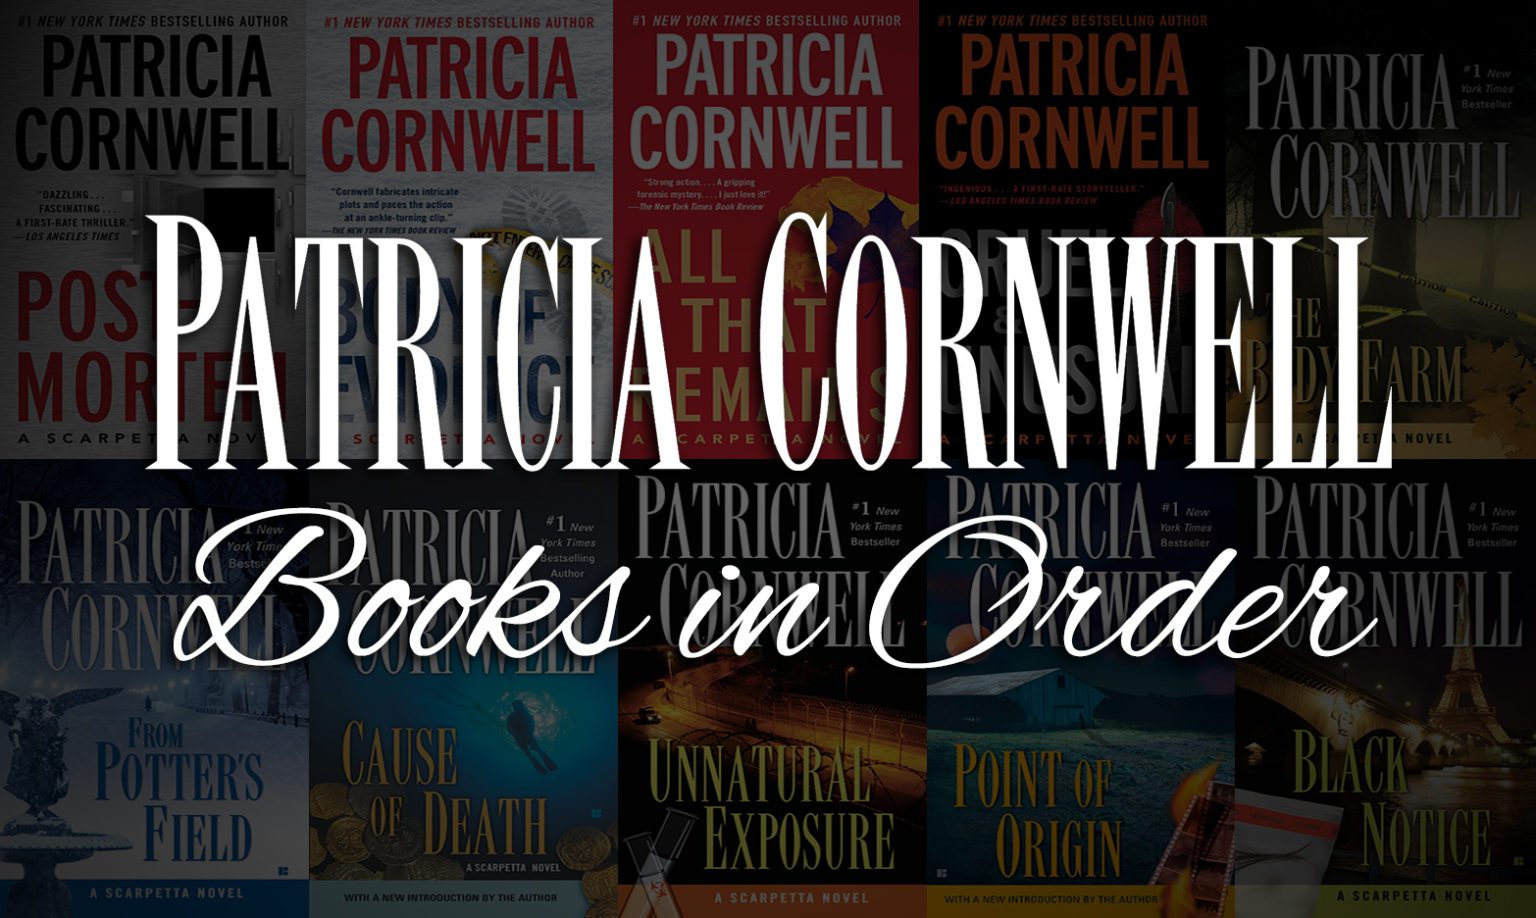 patricia cornwell creative writing scholarship